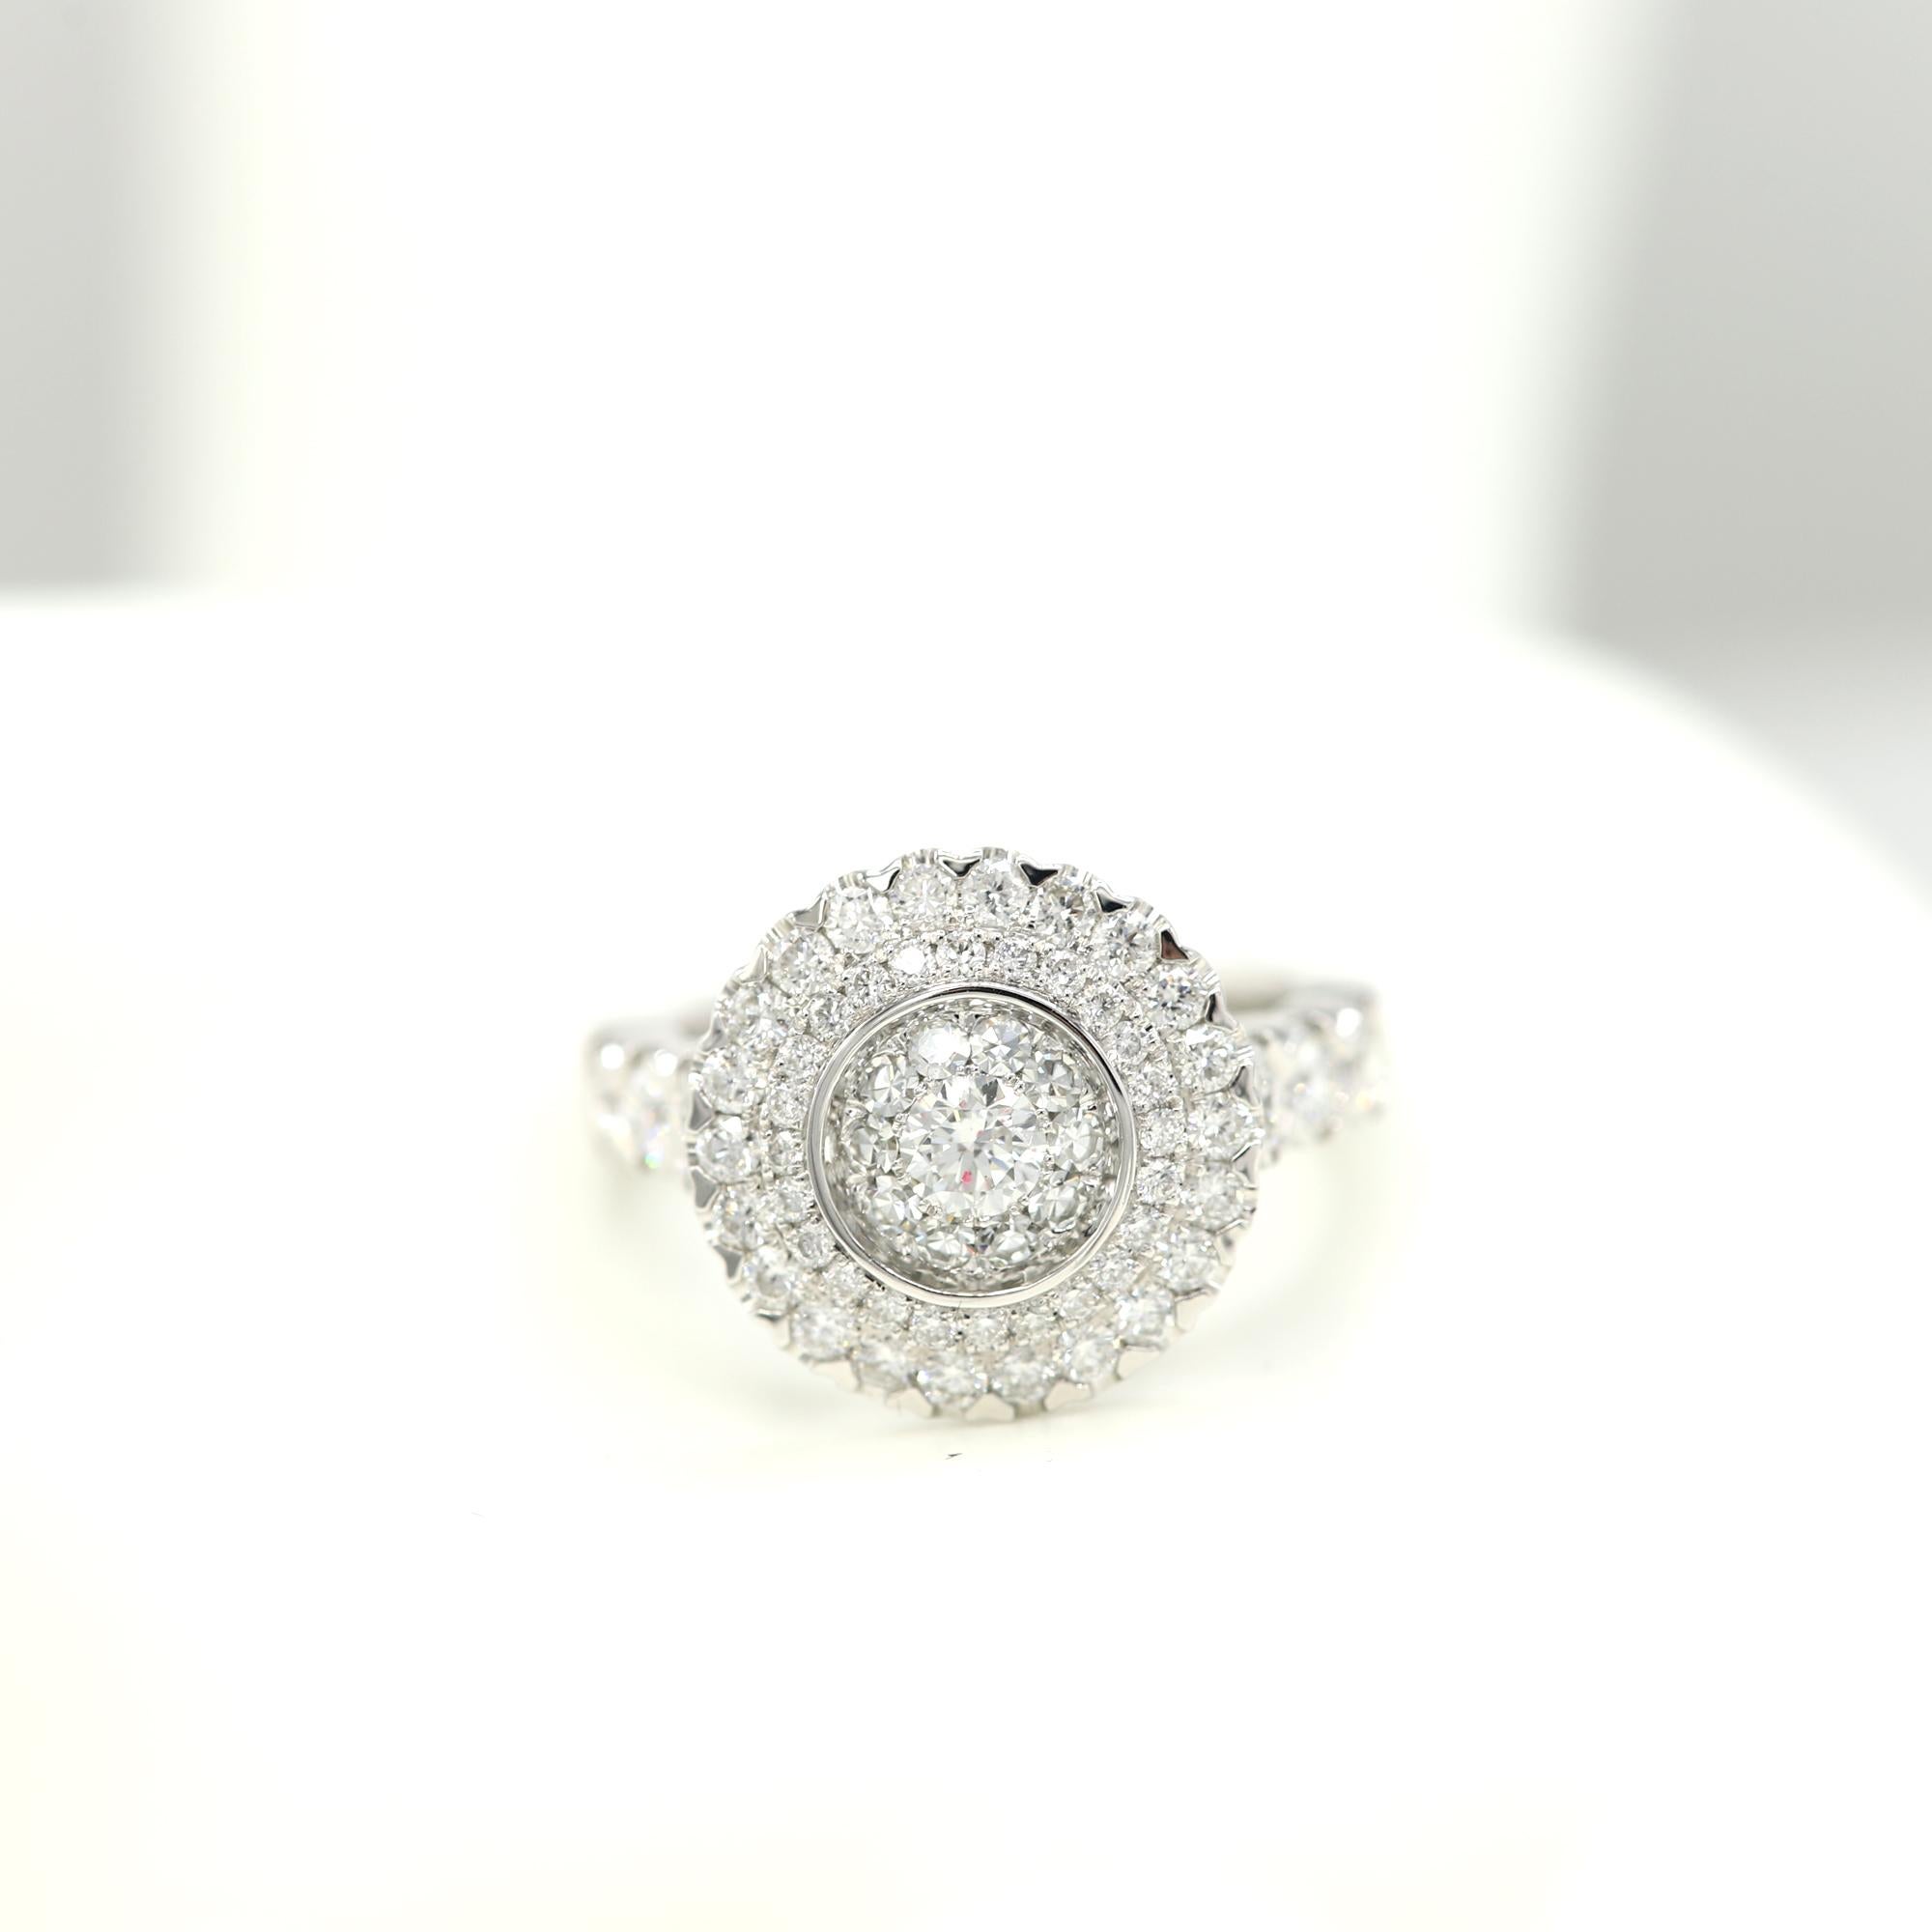 Large Cluster Diamond Ring 18 Karat White Gold Round Circle of Diamond Design For Sale 1